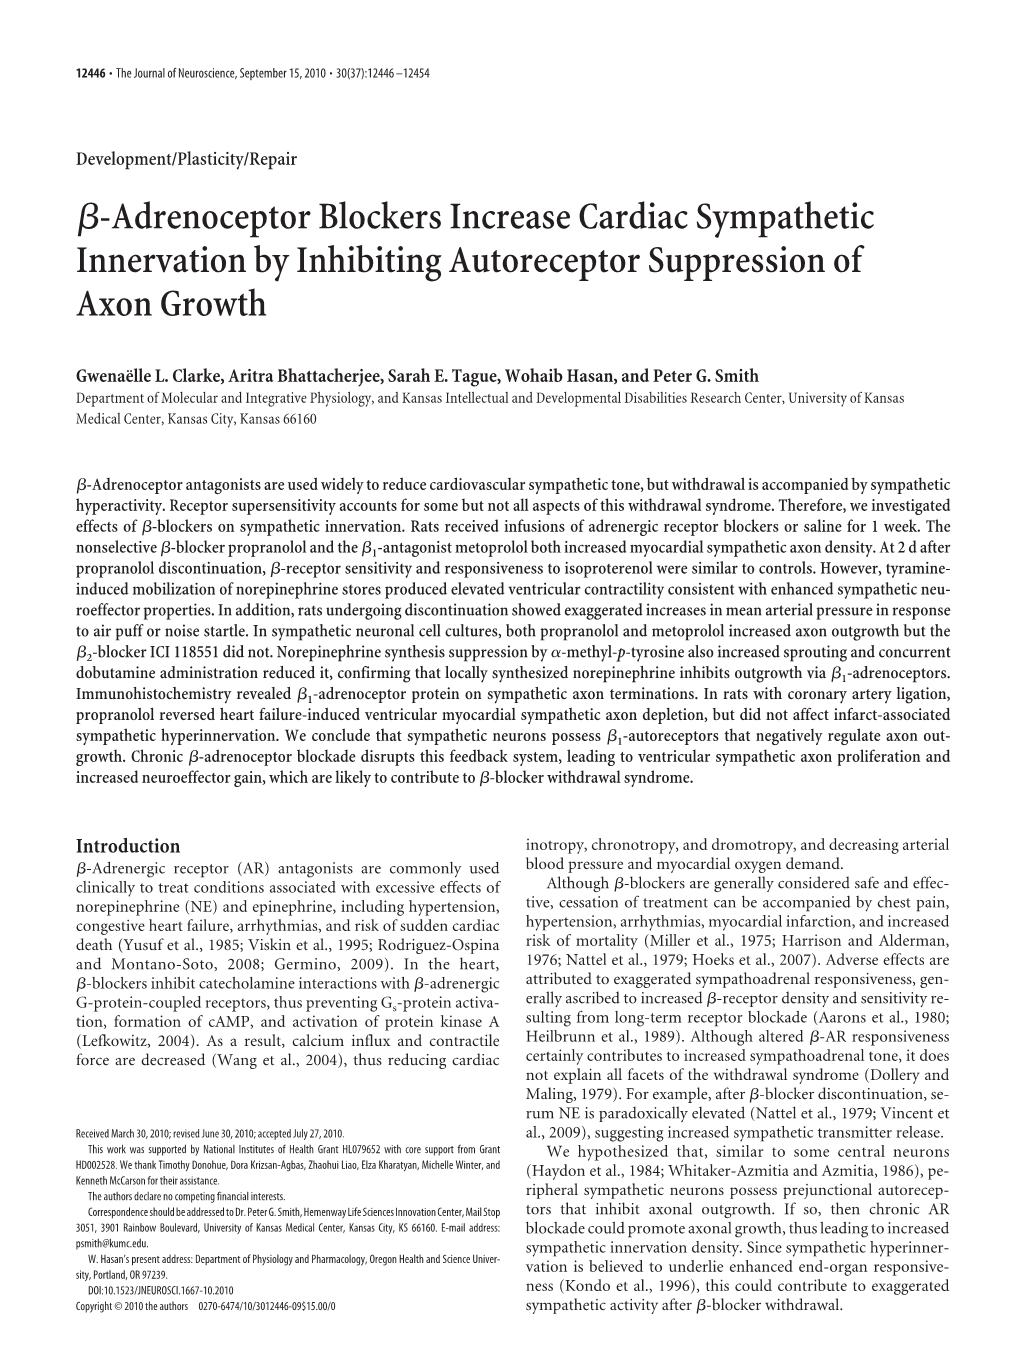 ß-Adrenoceptor Blockers Increase Cardiac Sympathetic Innervation By